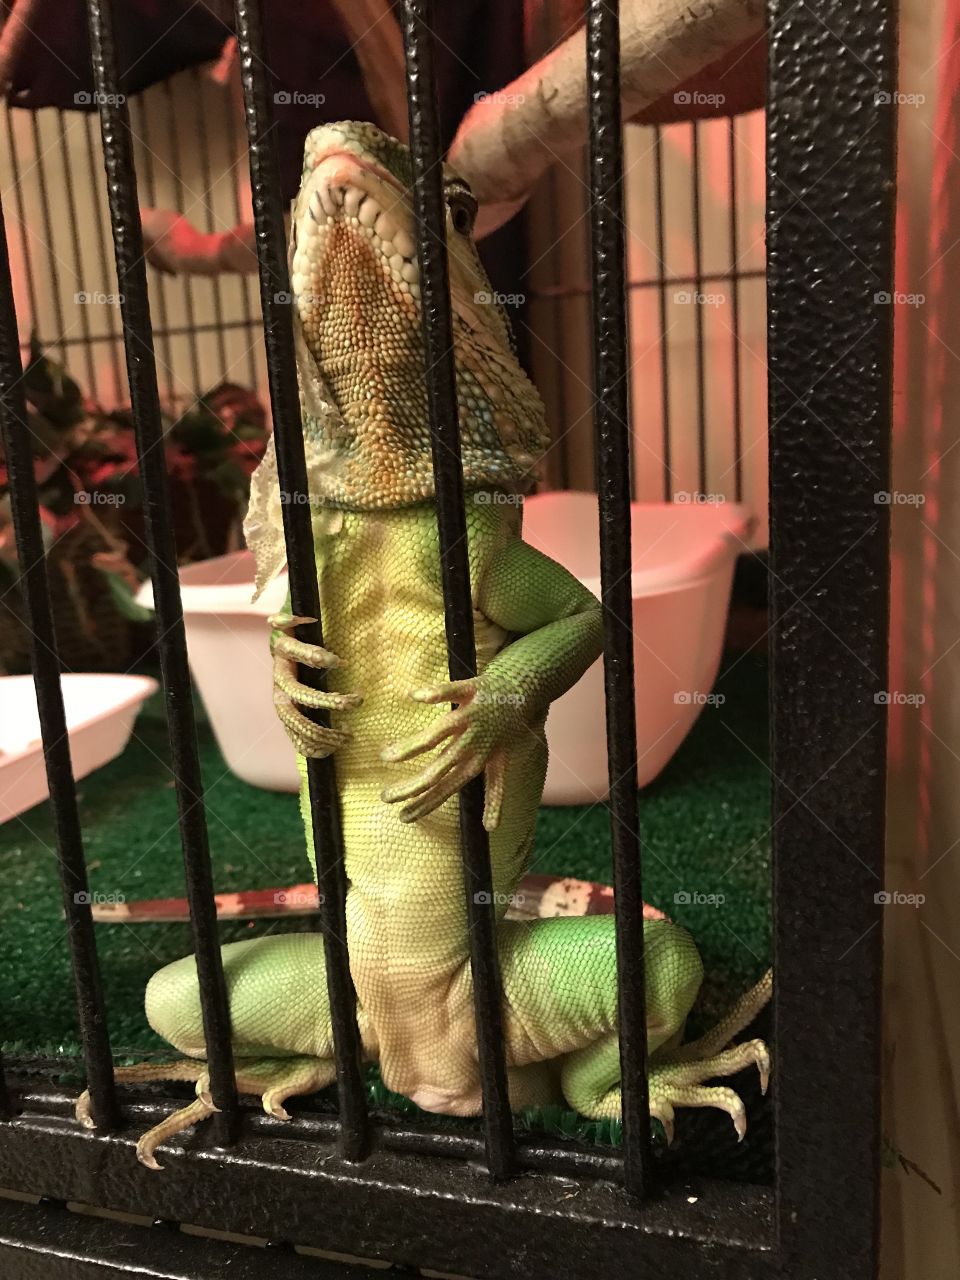 Jailed lizard 